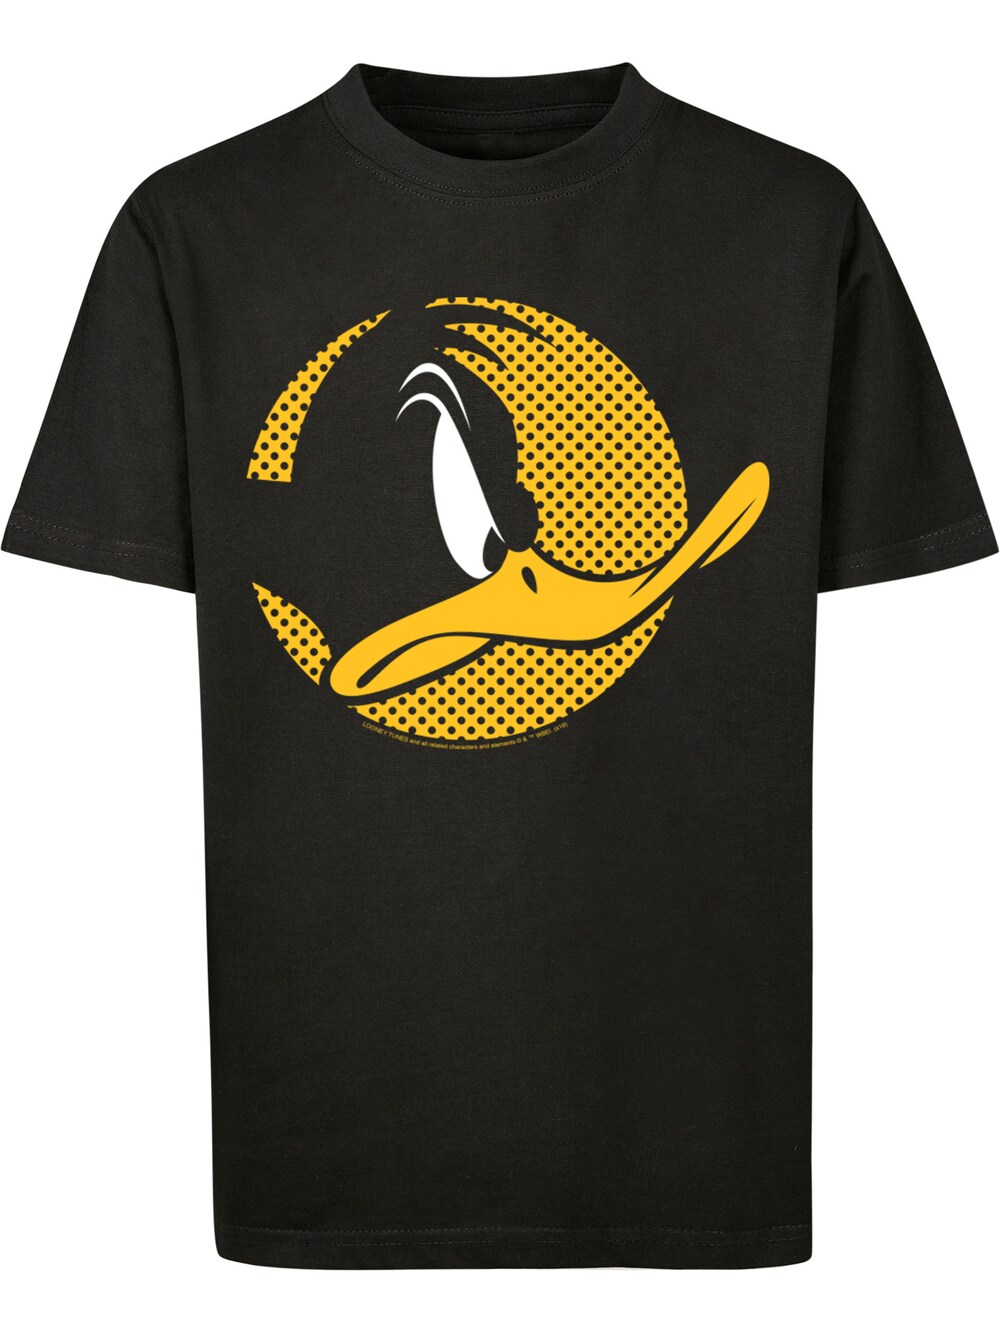 Футболка F4Nt4Stic Looney Tunes Daffy Duck Dotted Cartoon, черный футболка f4nt4stic looney tunes daffy duck binoculars vintage черный